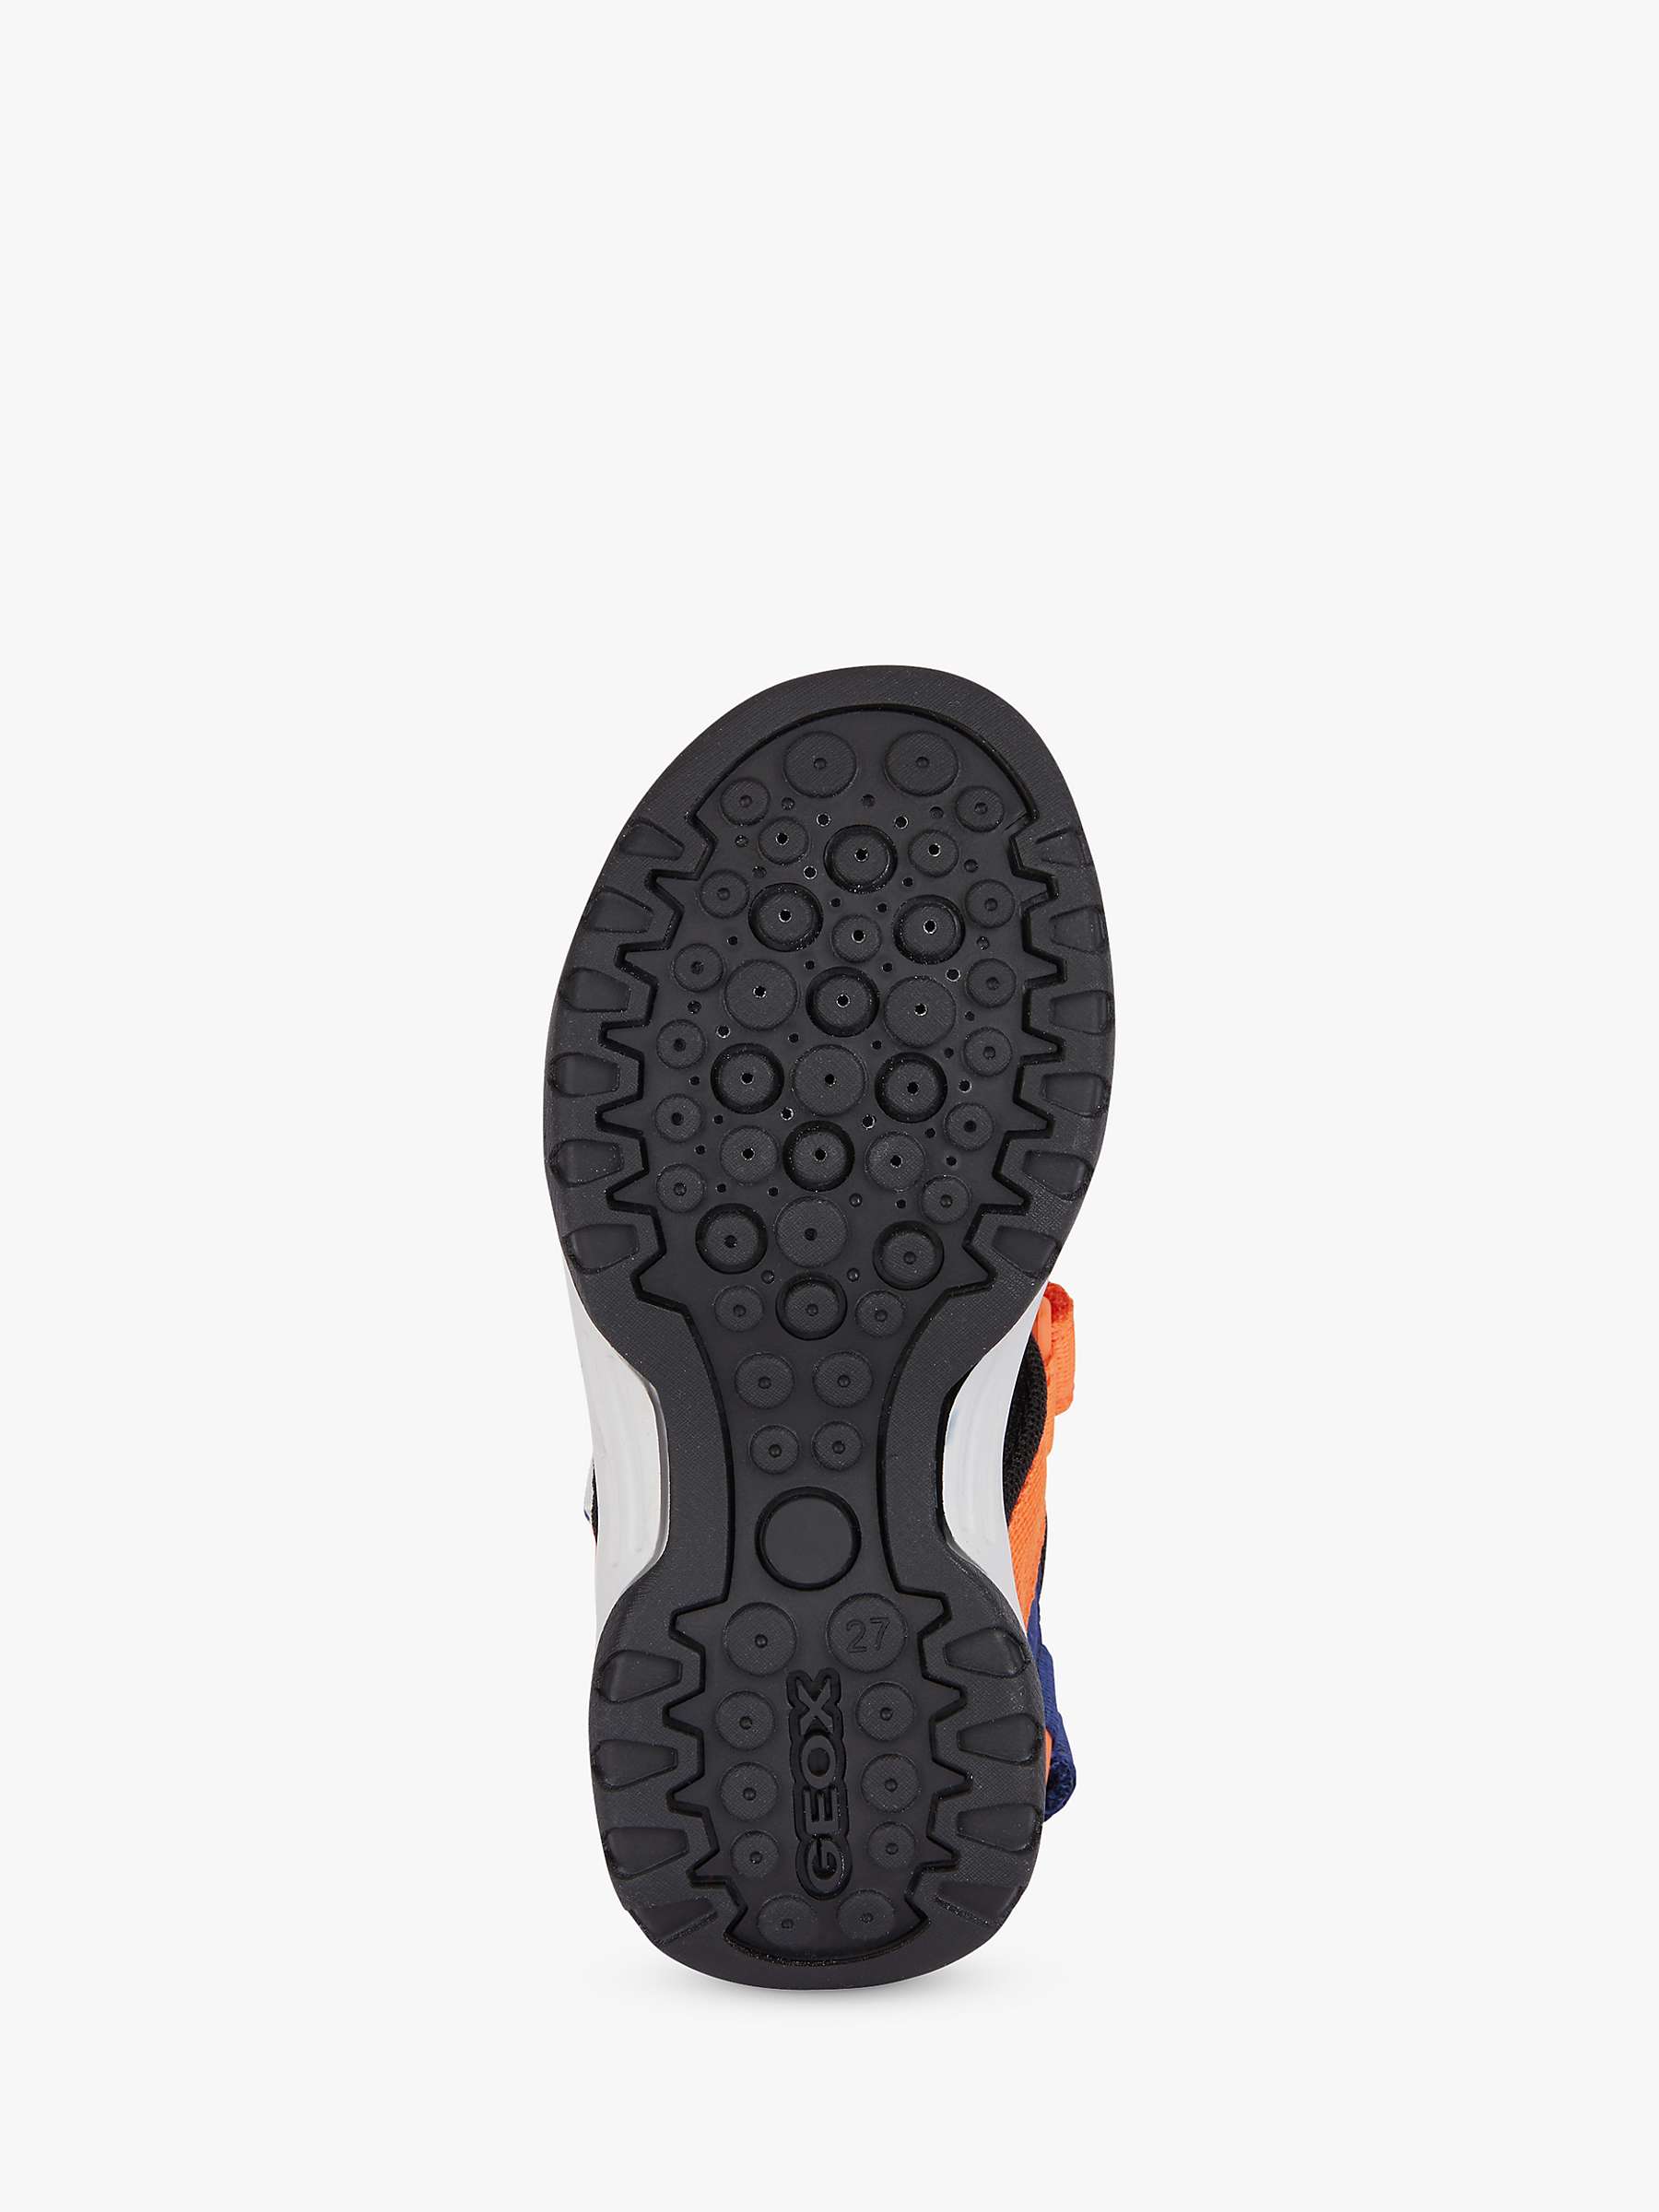 Buy Geox Borealis Riptape Sandals, Navy/Orange Online at johnlewis.com